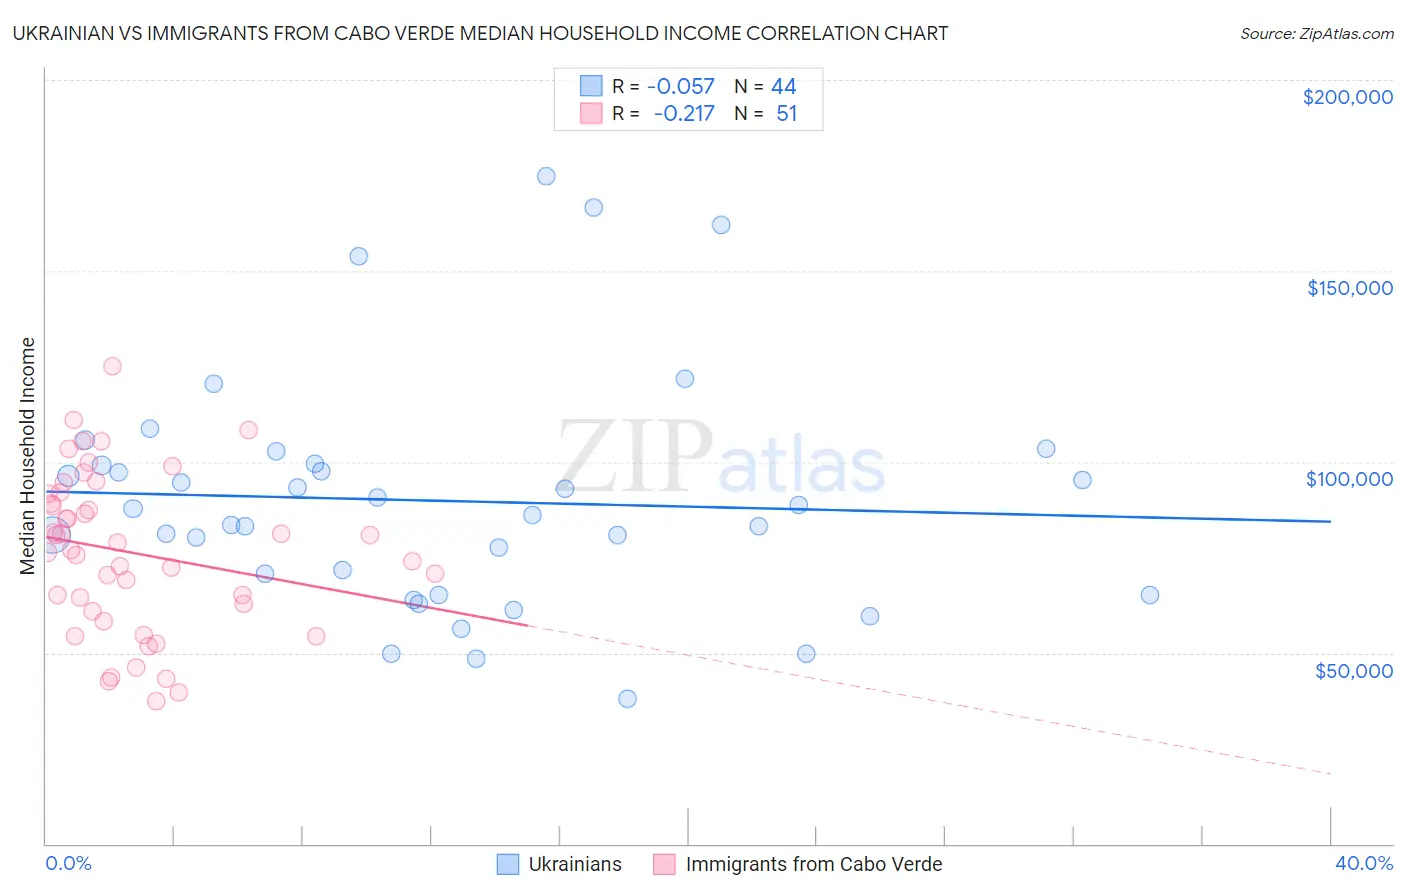 Ukrainian vs Immigrants from Cabo Verde Median Household Income